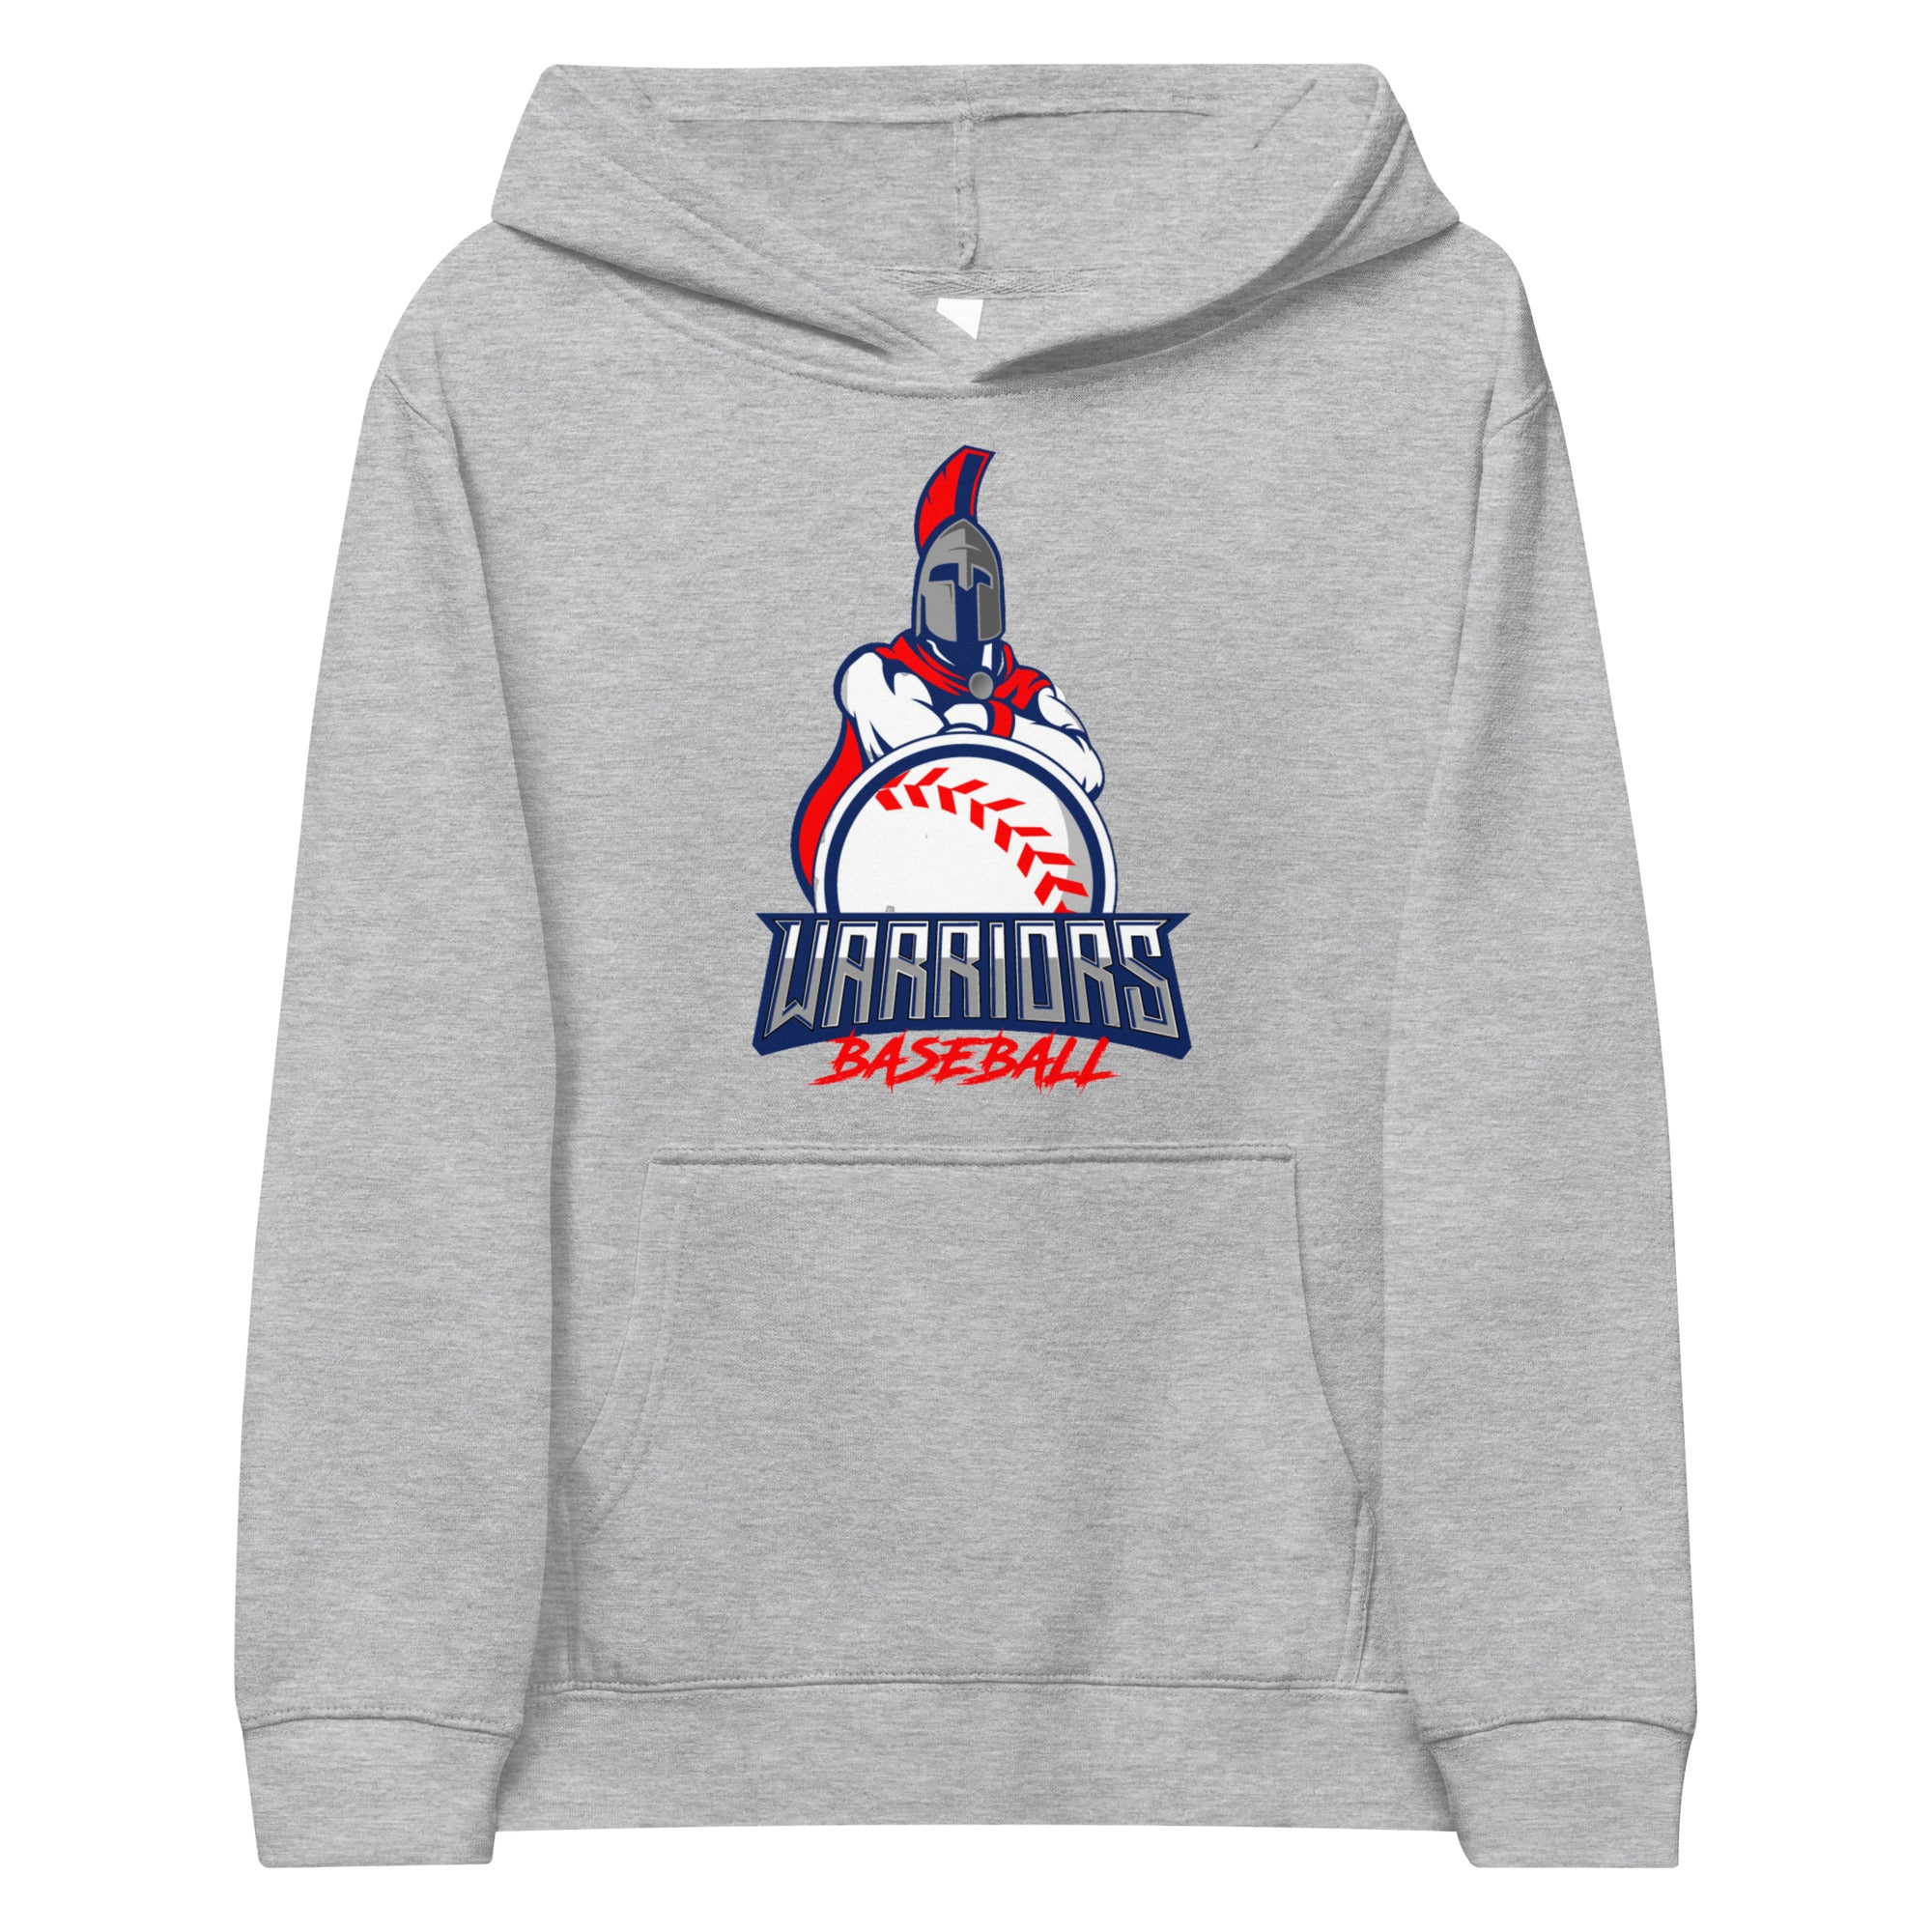 Tampa Warriors Baseball Seal Kids fleece hoodie